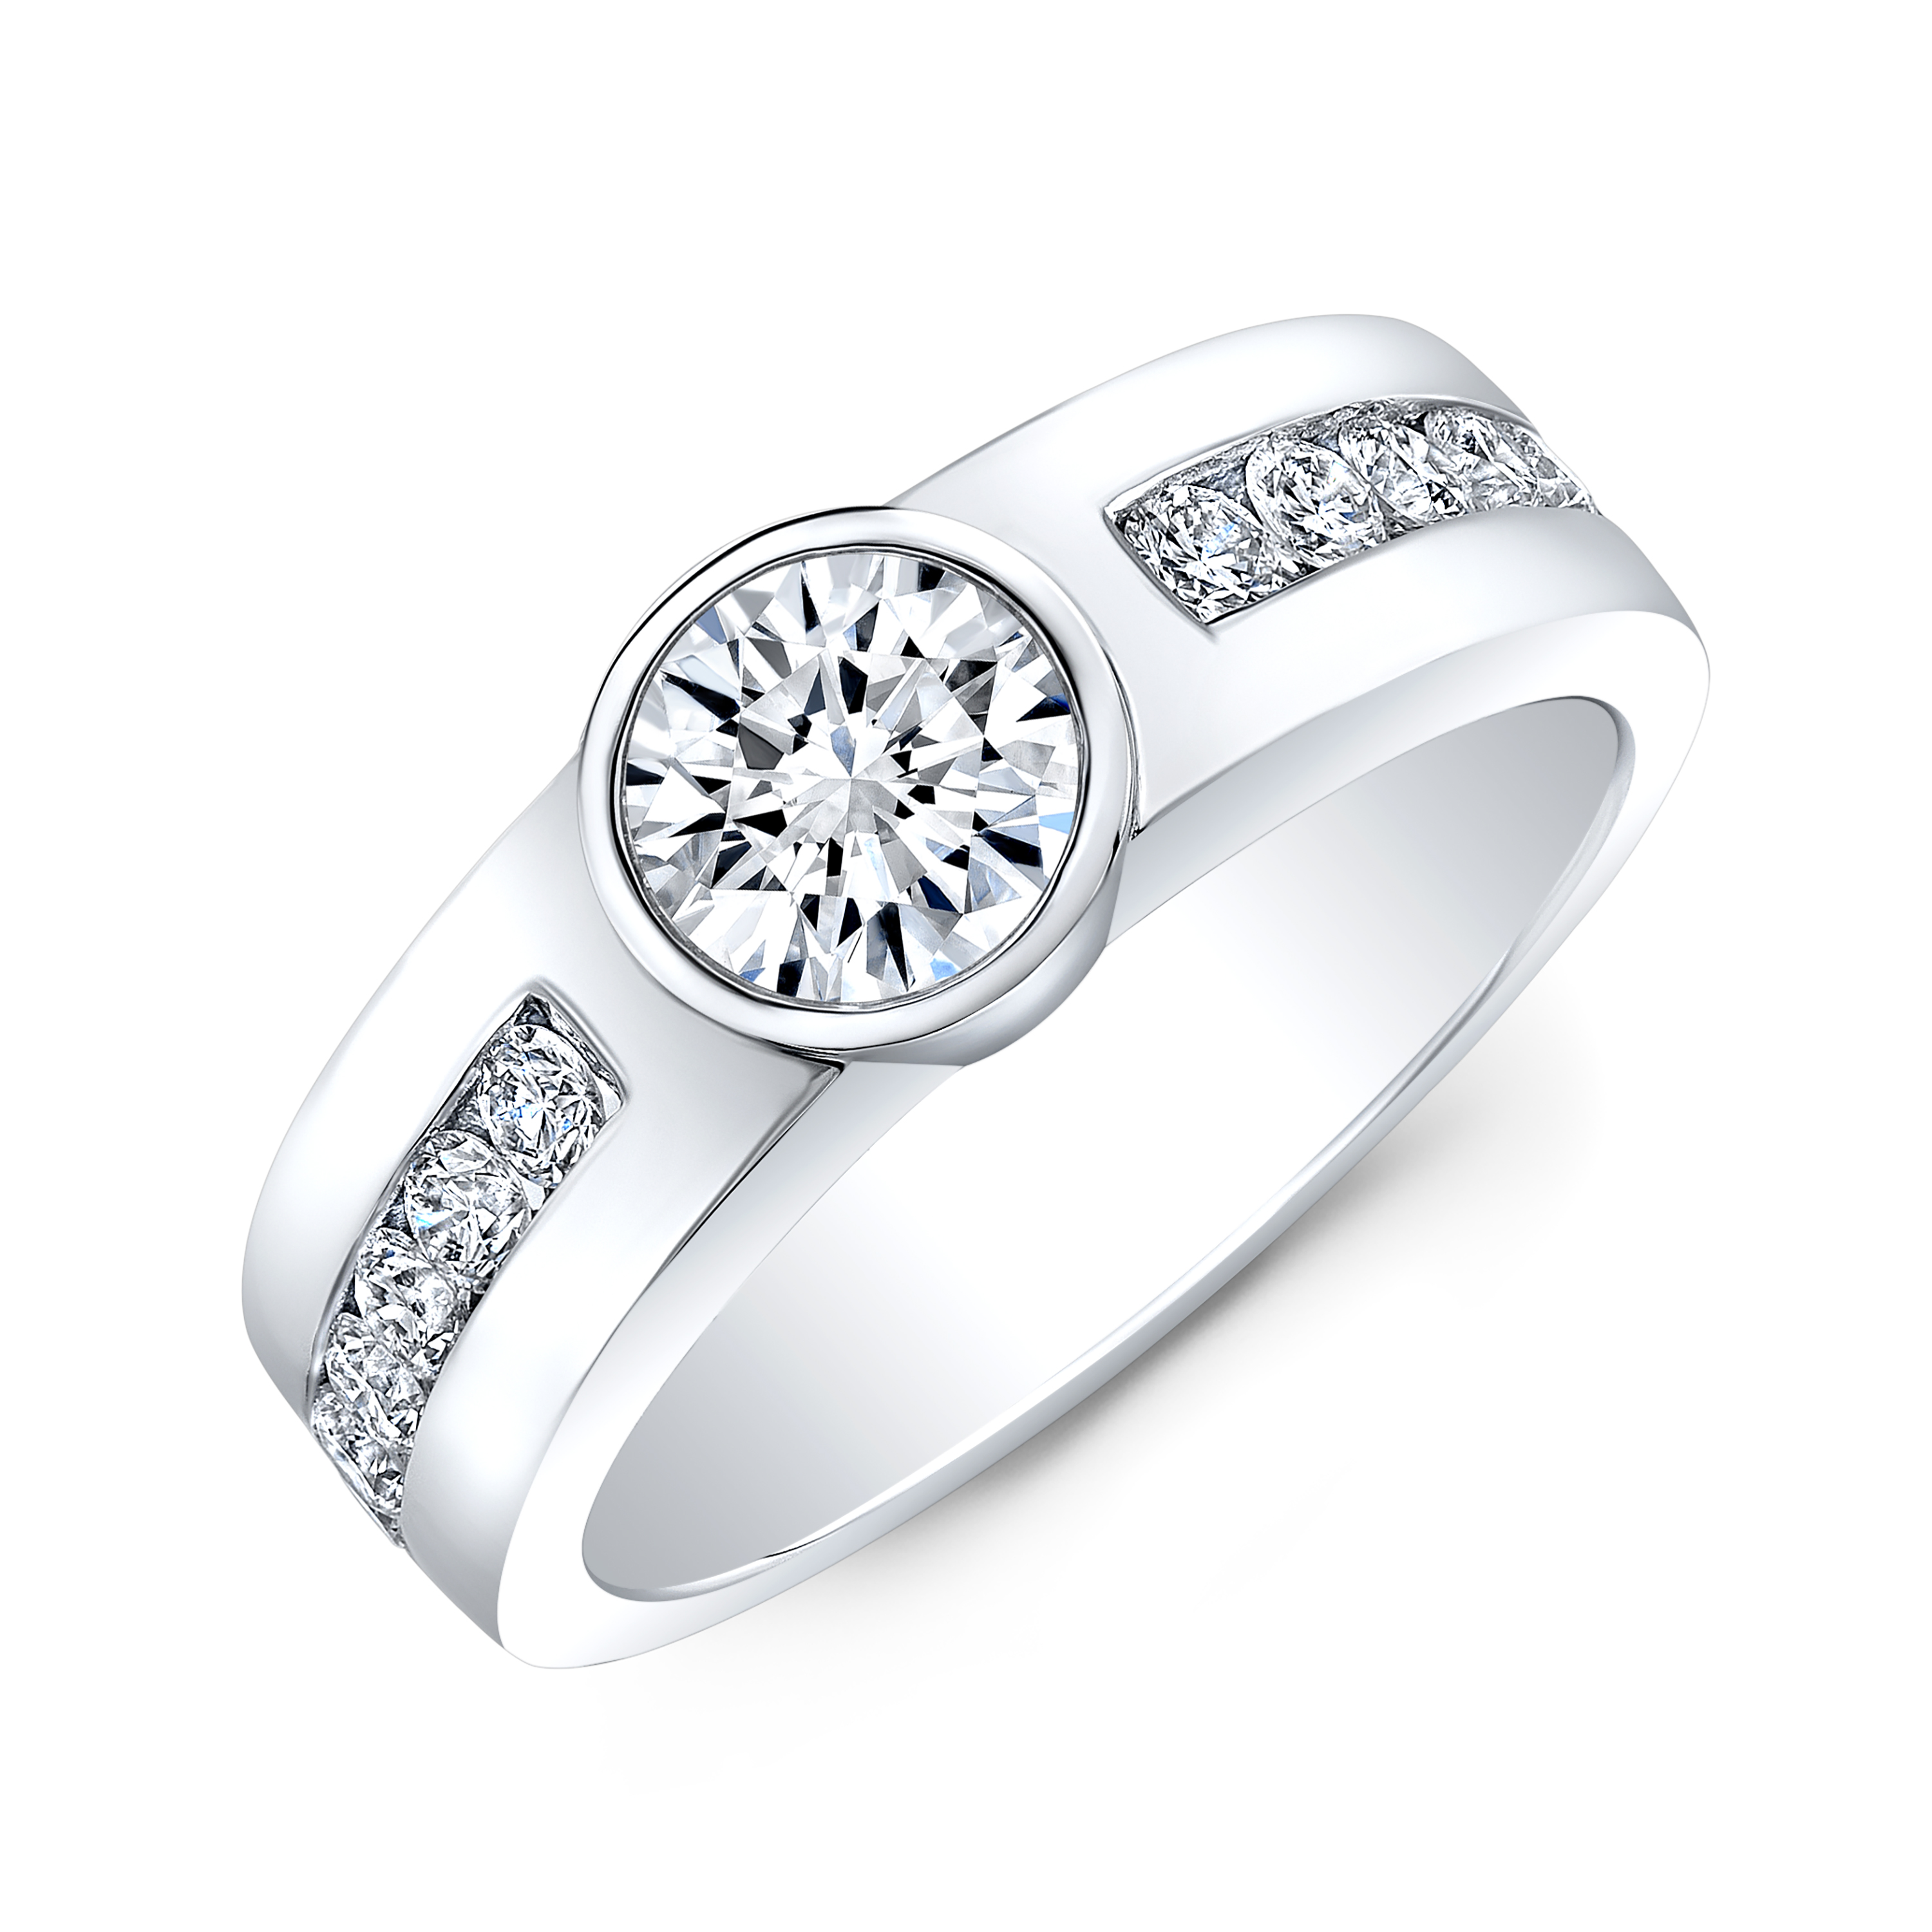 Can Men Wear Engagement Rings? - Sandberg Jewelers